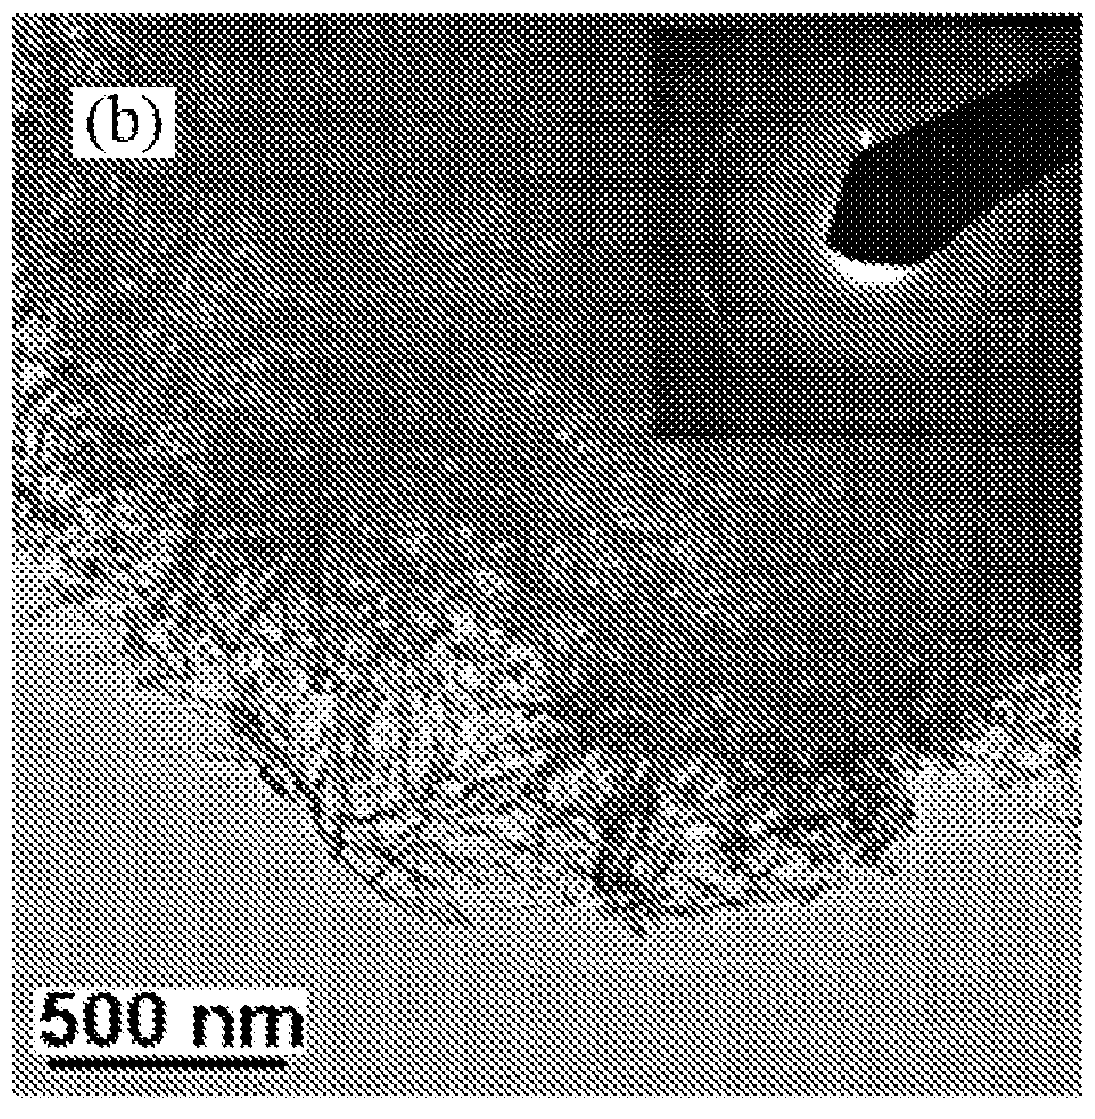 Aggregate particles of titanium dioxide for solar cells